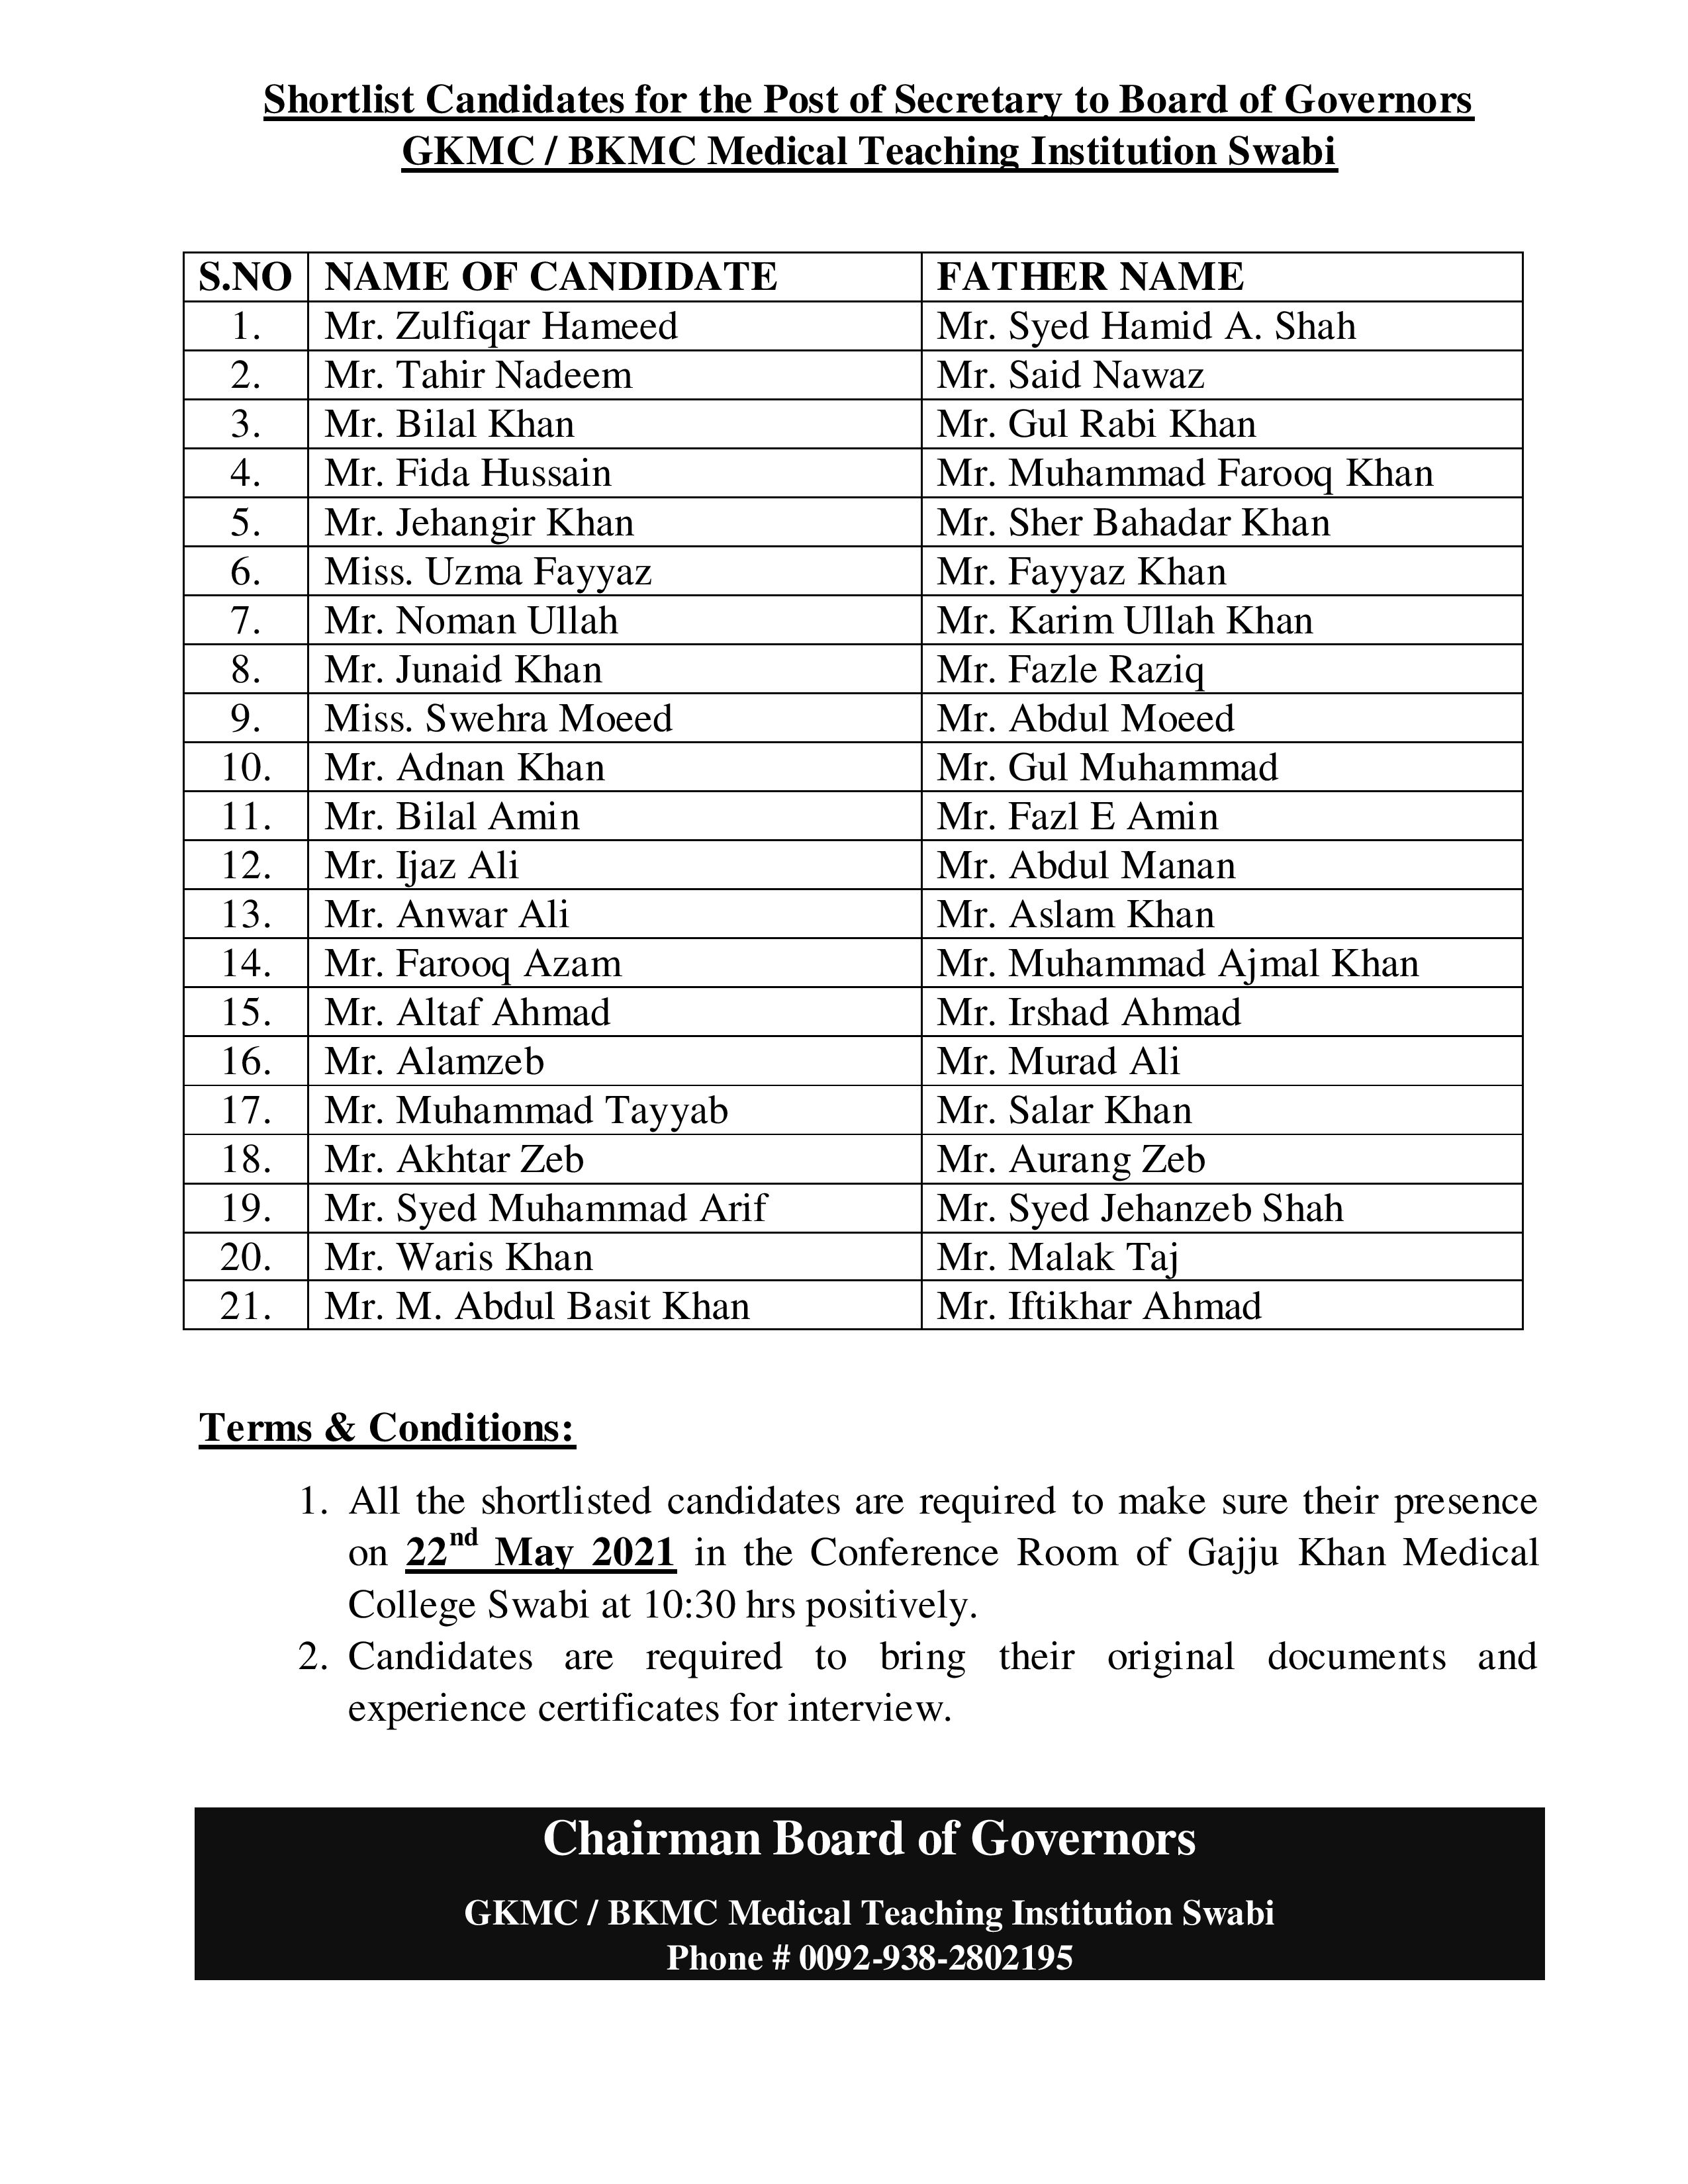 List of Shortlisted Candidates for the post of Secretary BoG GKMC / BKMC MTI Swabi.